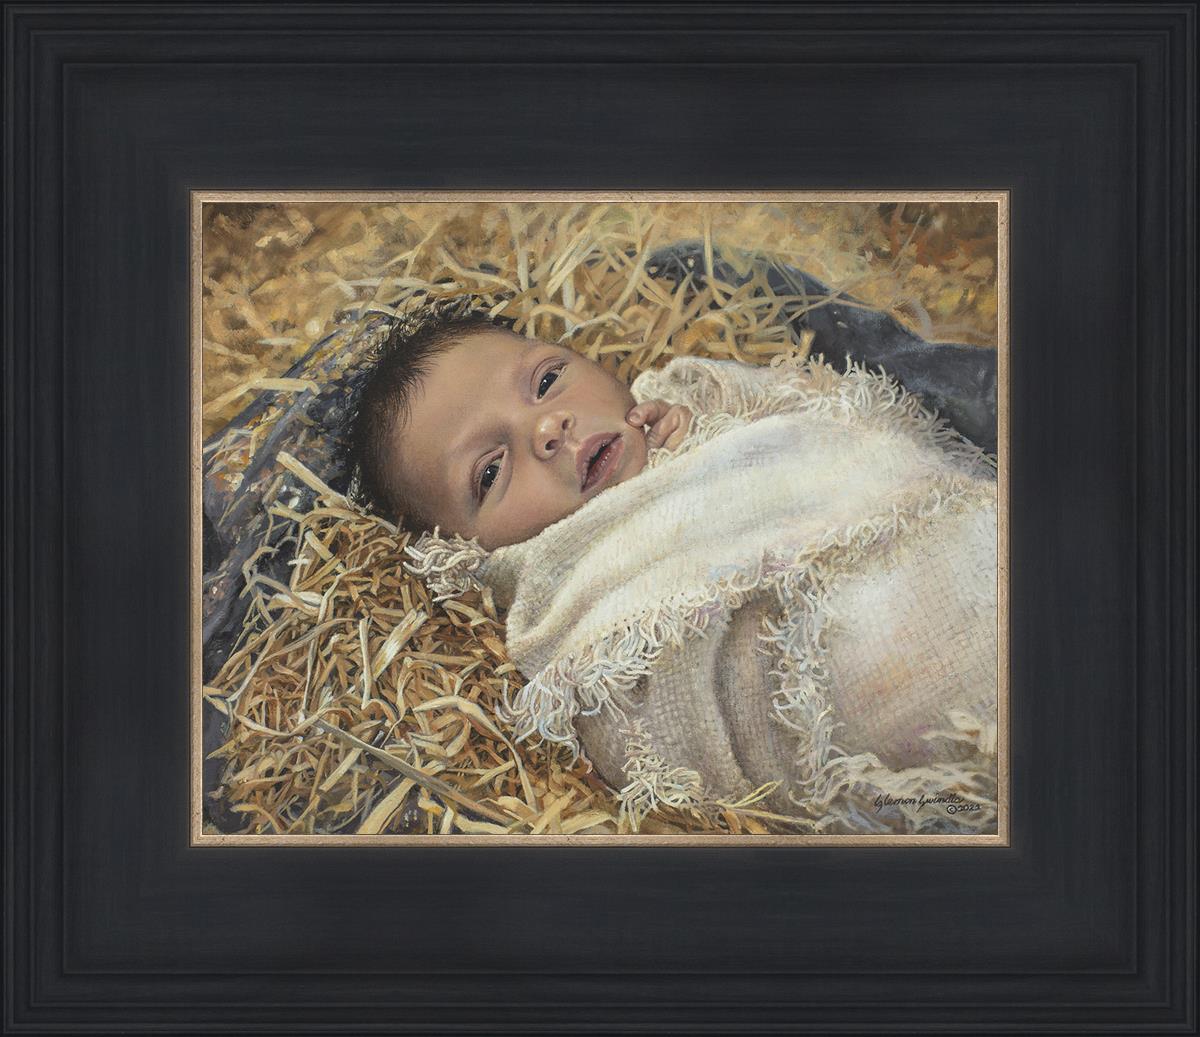 My Life Begins Again - By Luzdy Rivera  Pregnancy art, Newborn art,  Beautiful art paintings